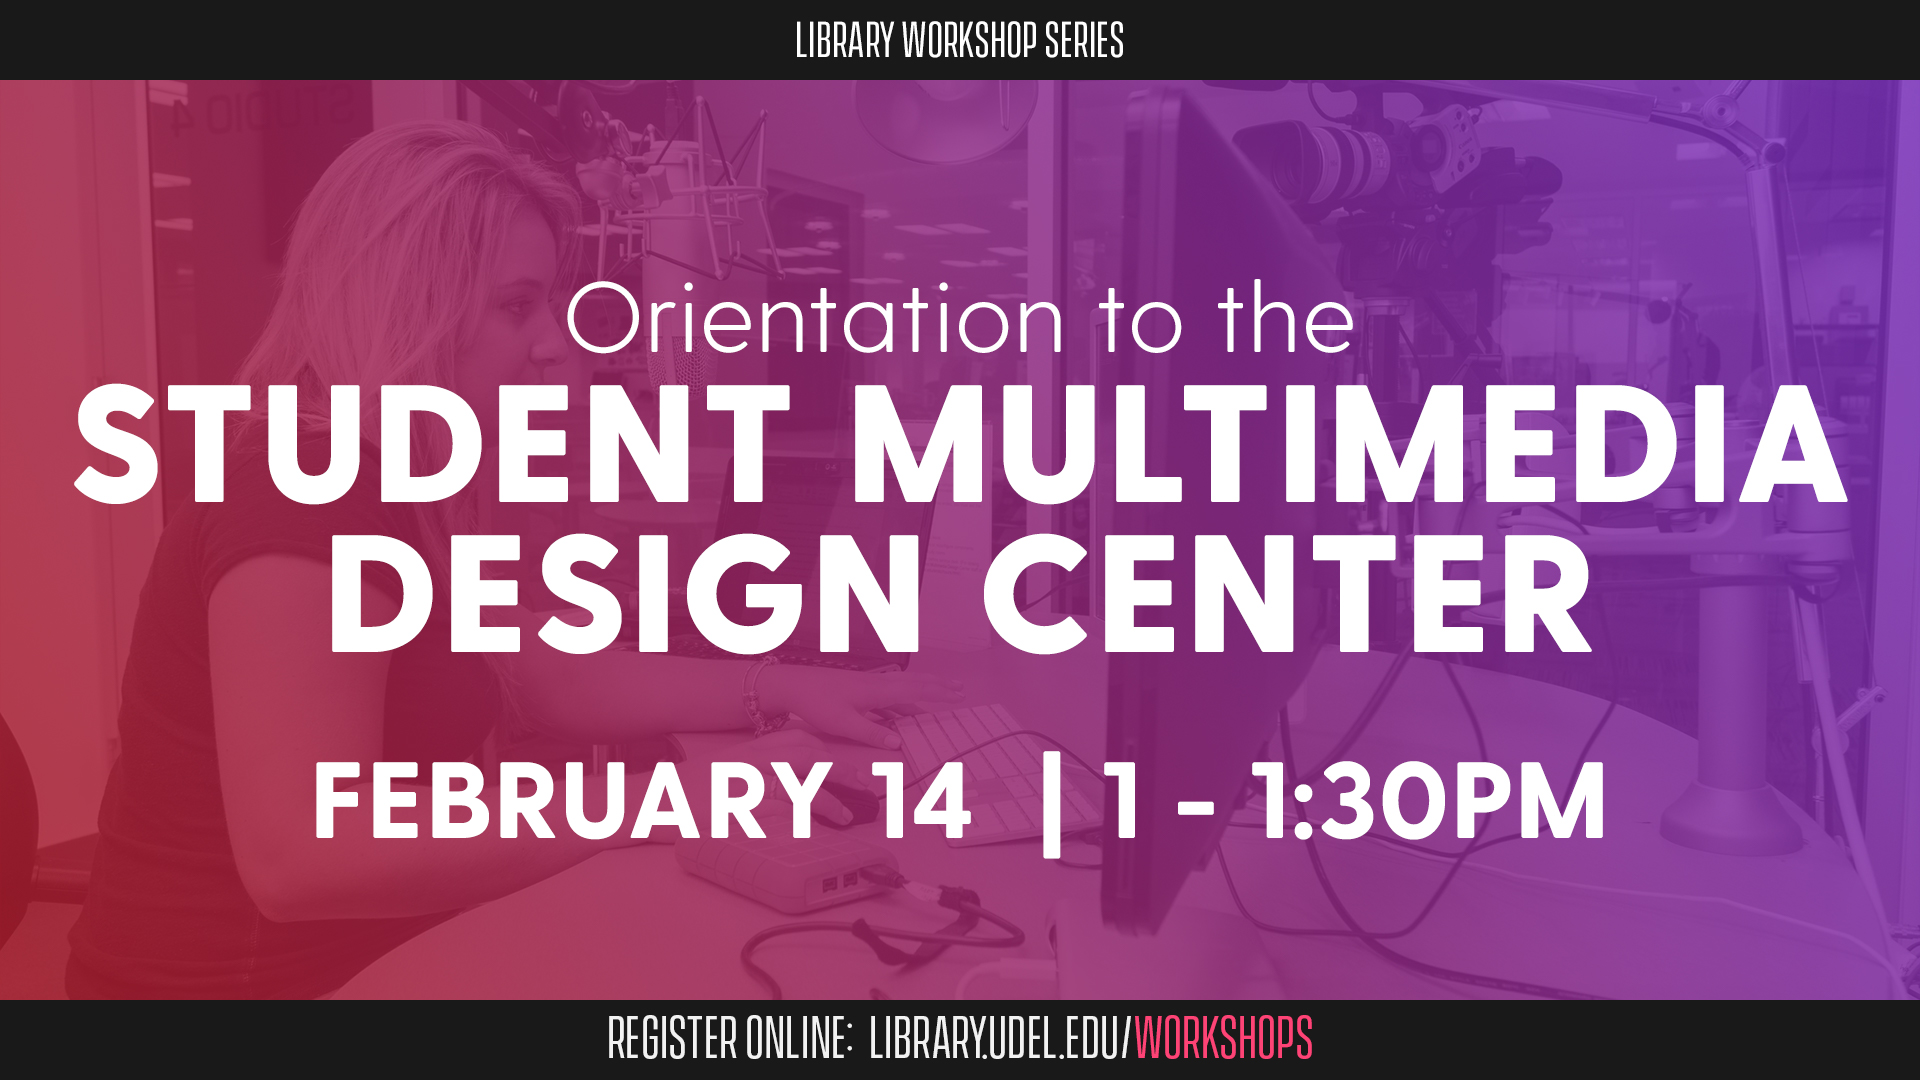 Promotional image for Student Multimedia Design Center Orientation